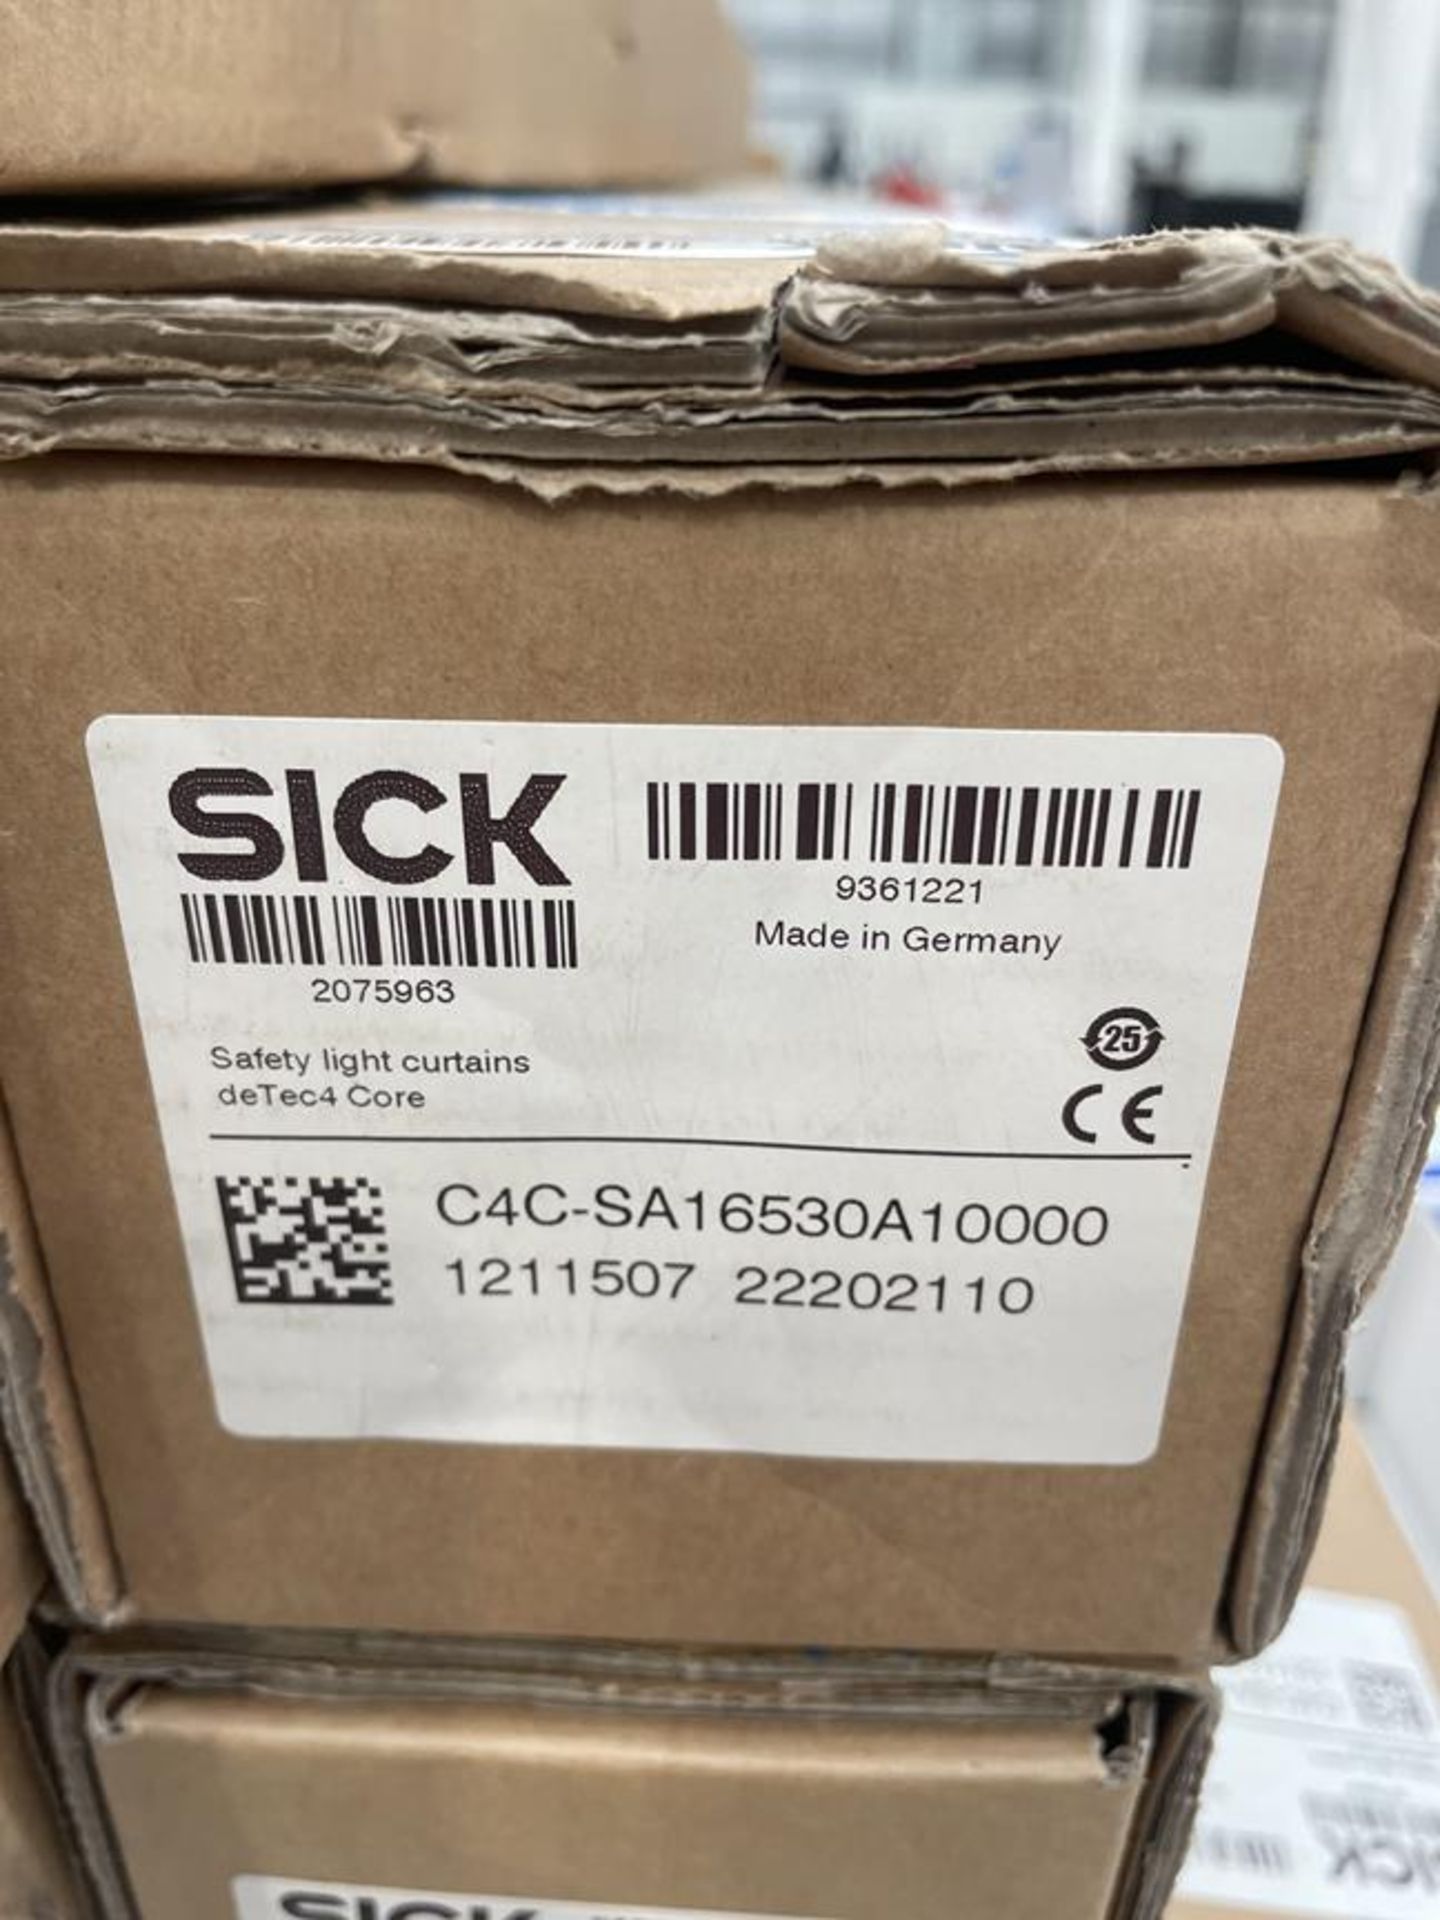 11x (no.) Sick, C4C-SA16530A10000 safety light curtains (boxed) with 1x (no.) Sick C2C-SA16530A10000 - Image 3 of 3